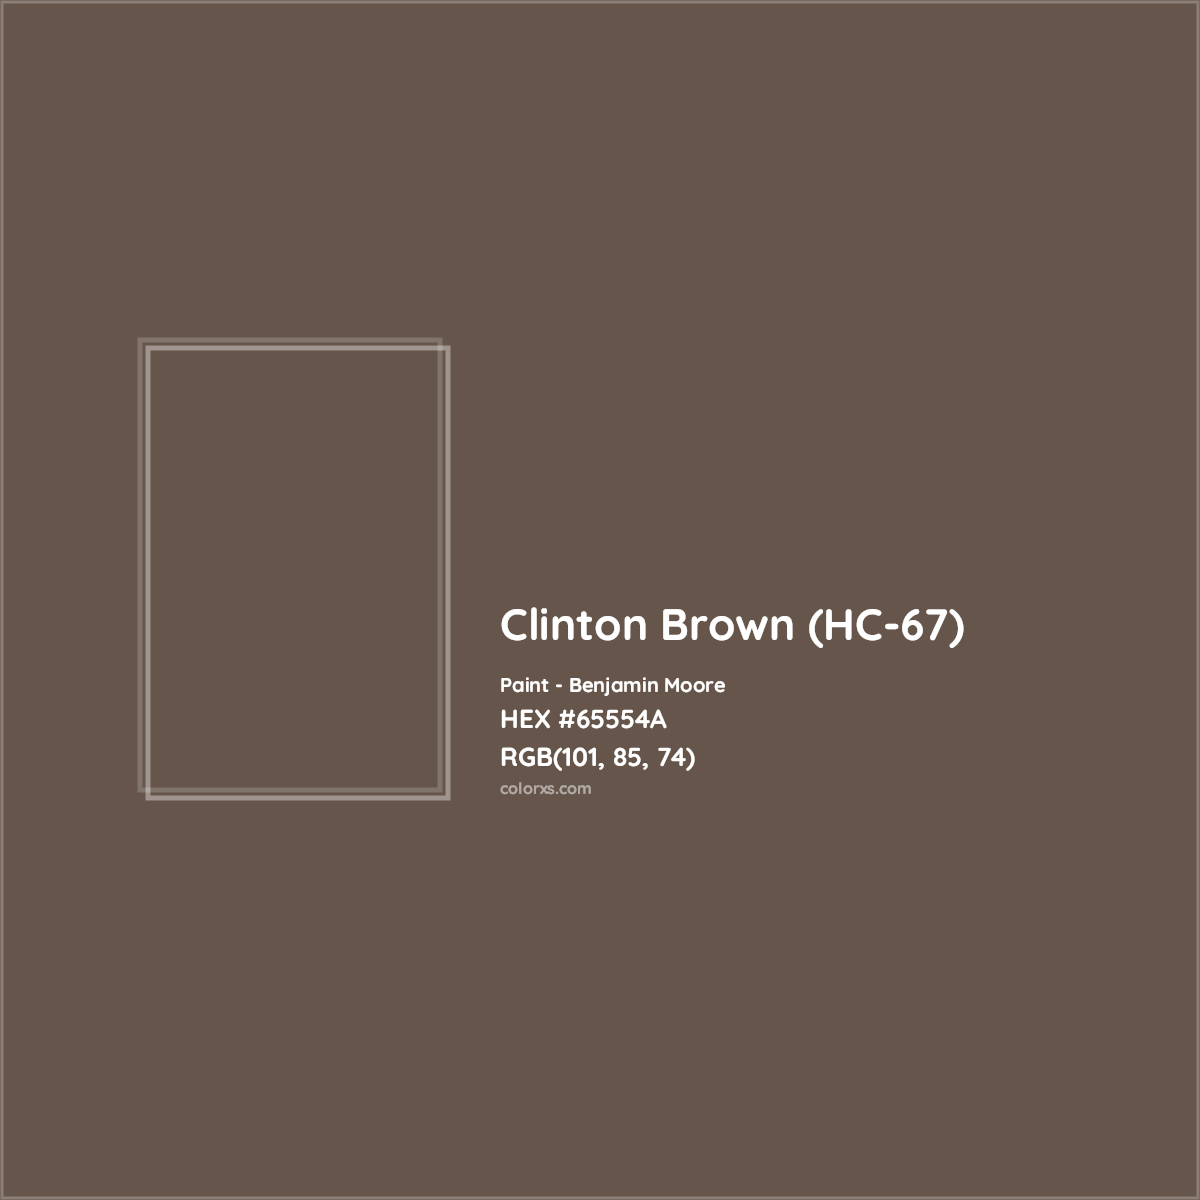 HEX #65554A Clinton Brown (HC-67) Paint Benjamin Moore - Color Code